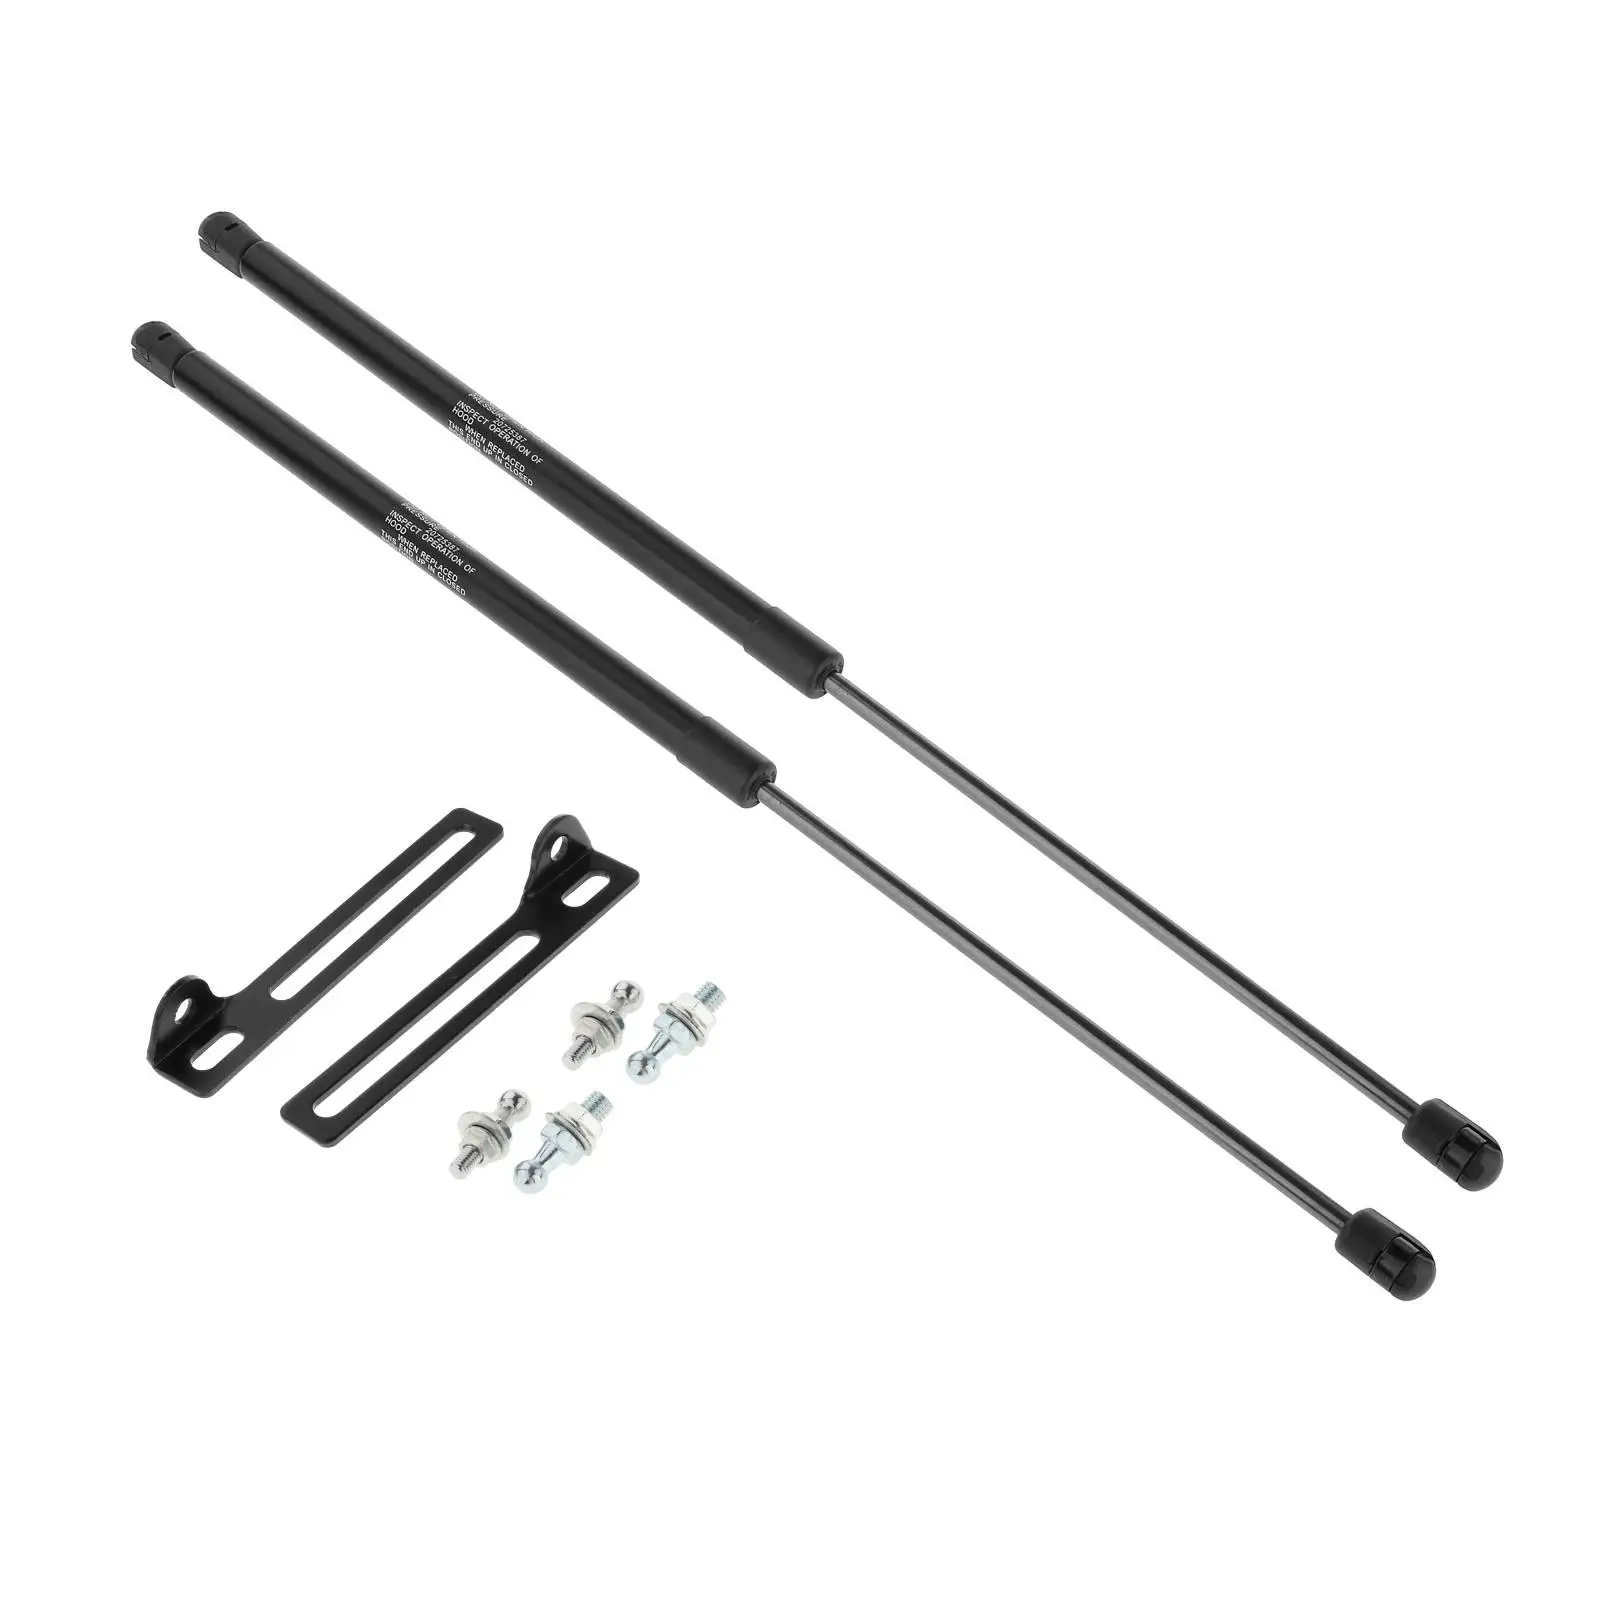 2x Car Hood Gas Struts Rod Lift Support Absorber for SEAT Leon MK3 Premium